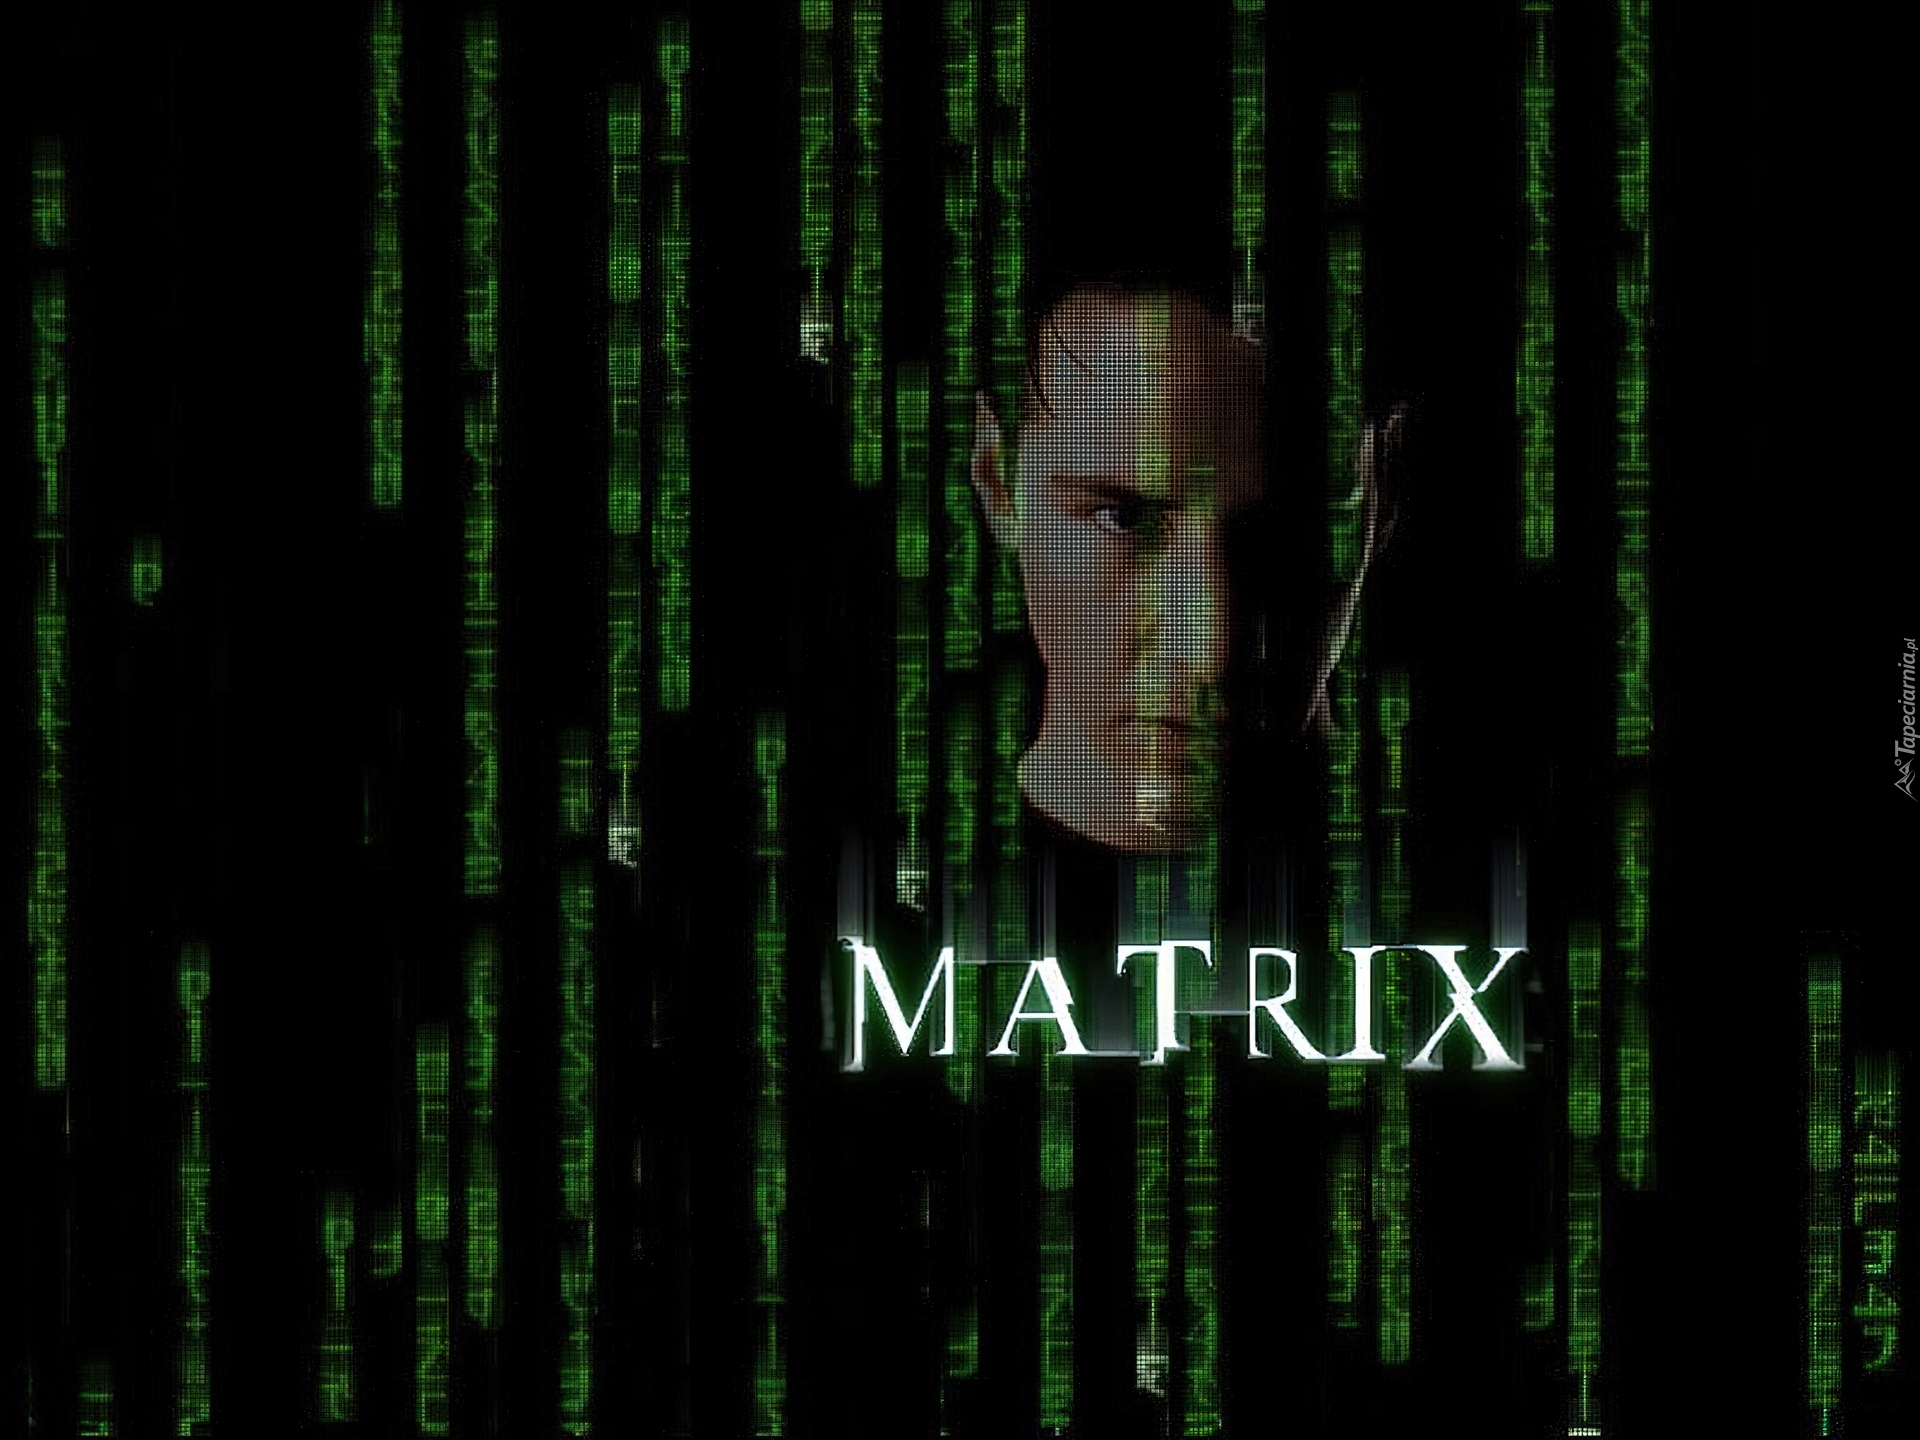 Matrix, Kod, Neo